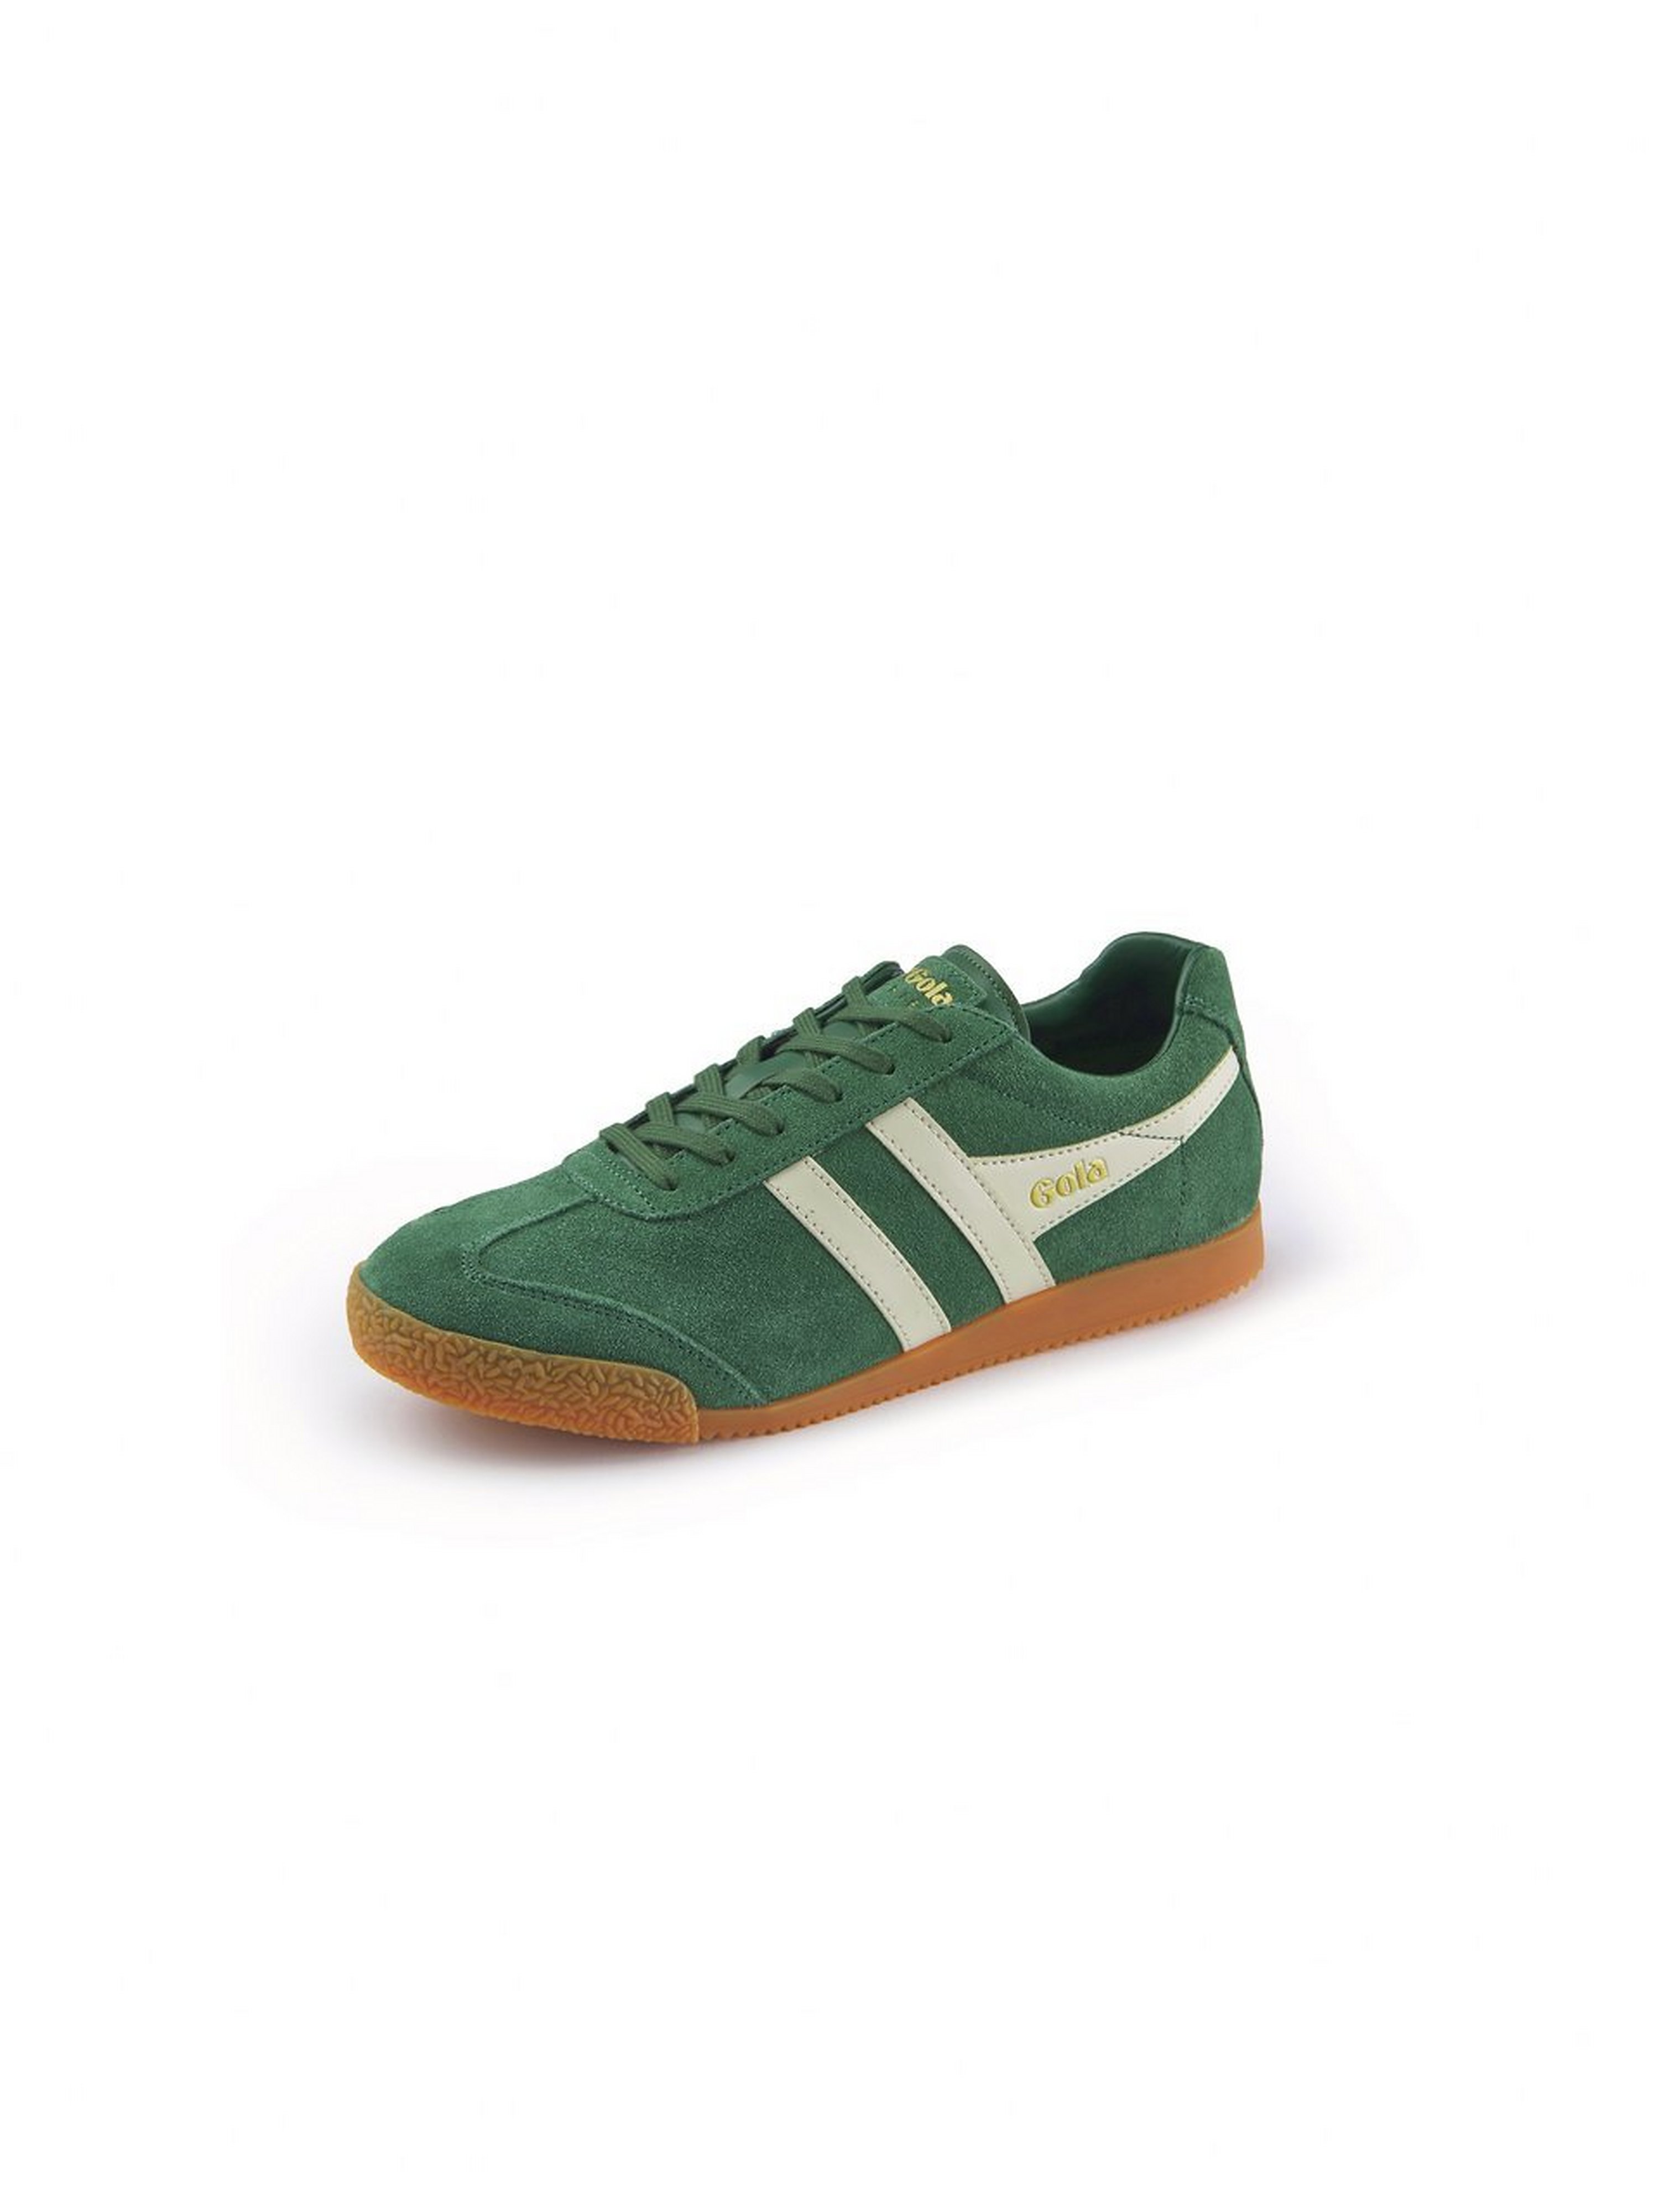 Sneakers Van Gola groen